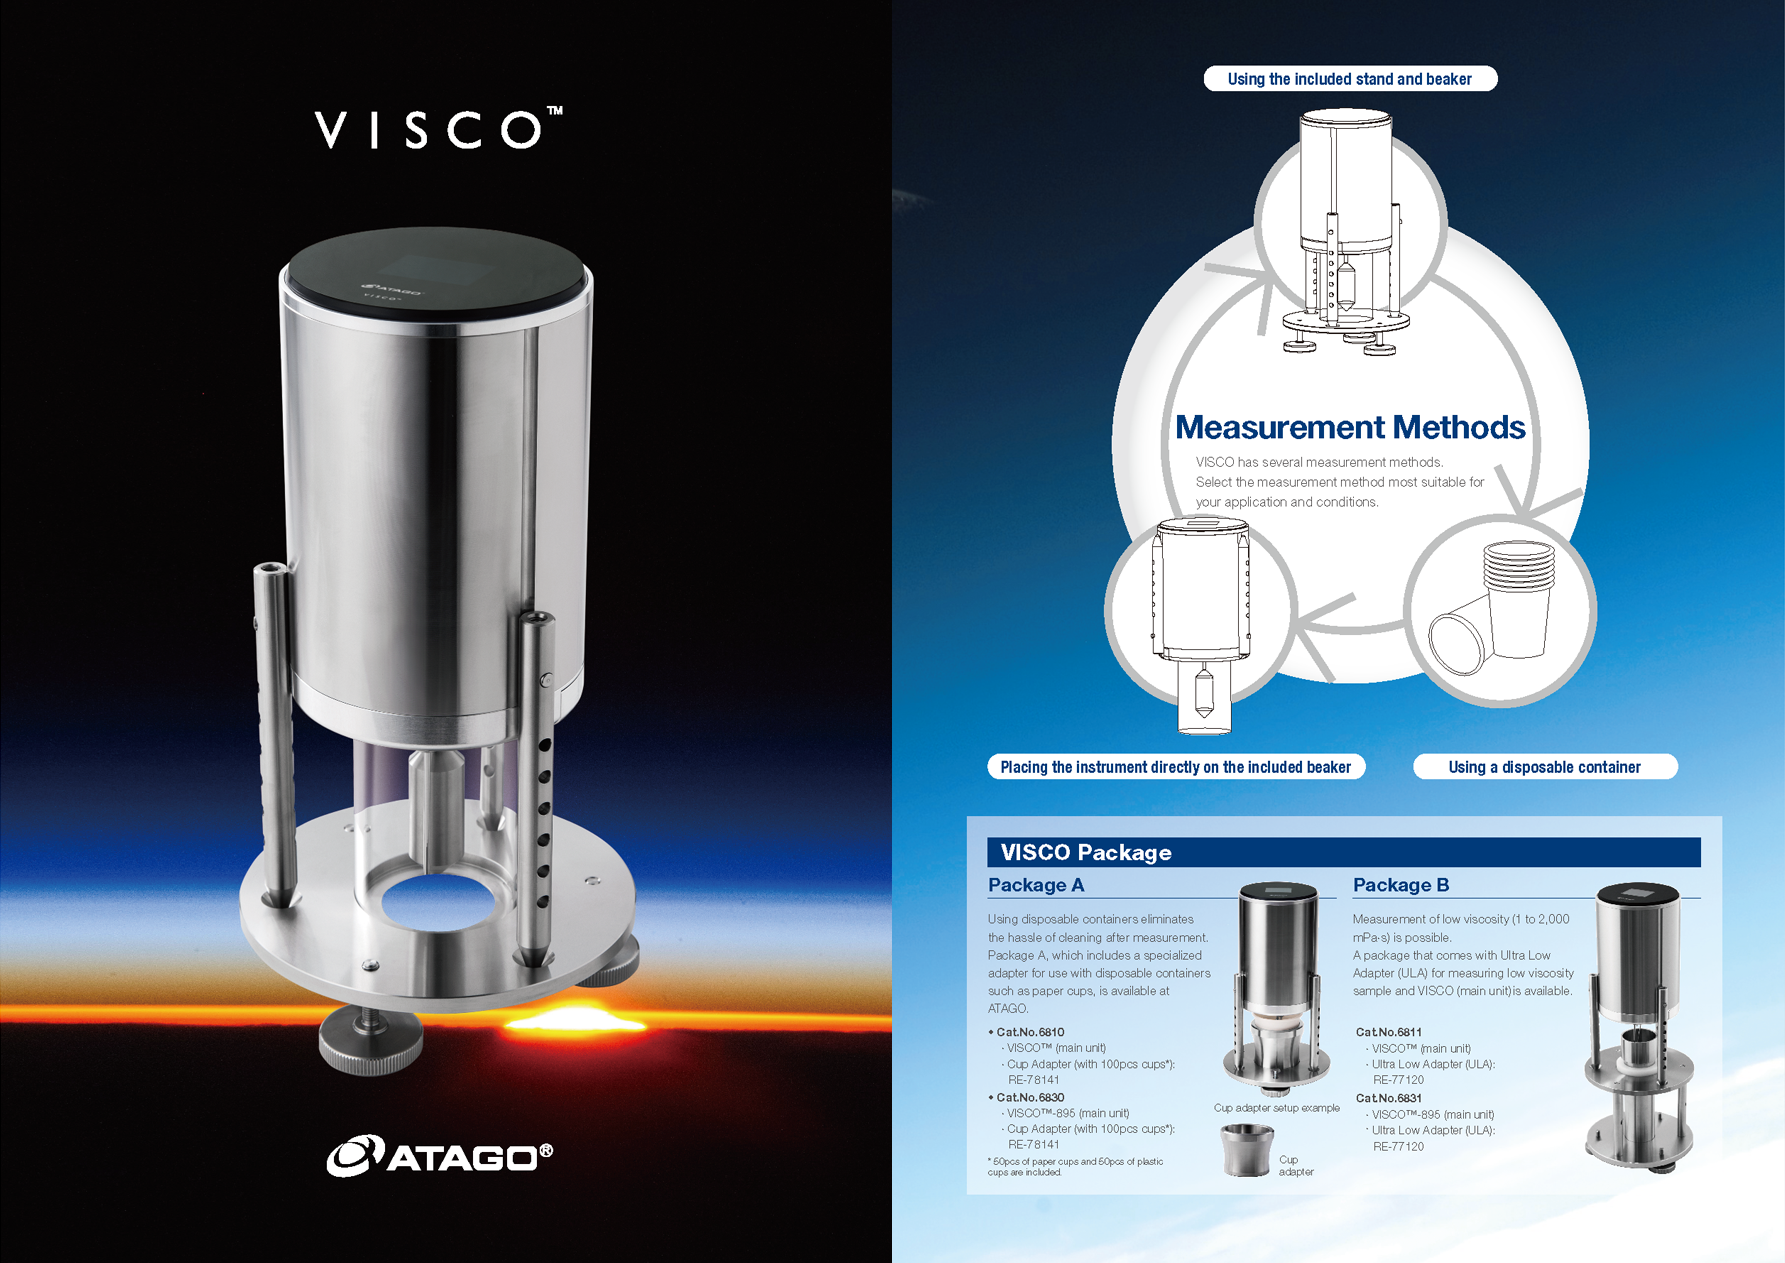 VISCO / Measurement Methods